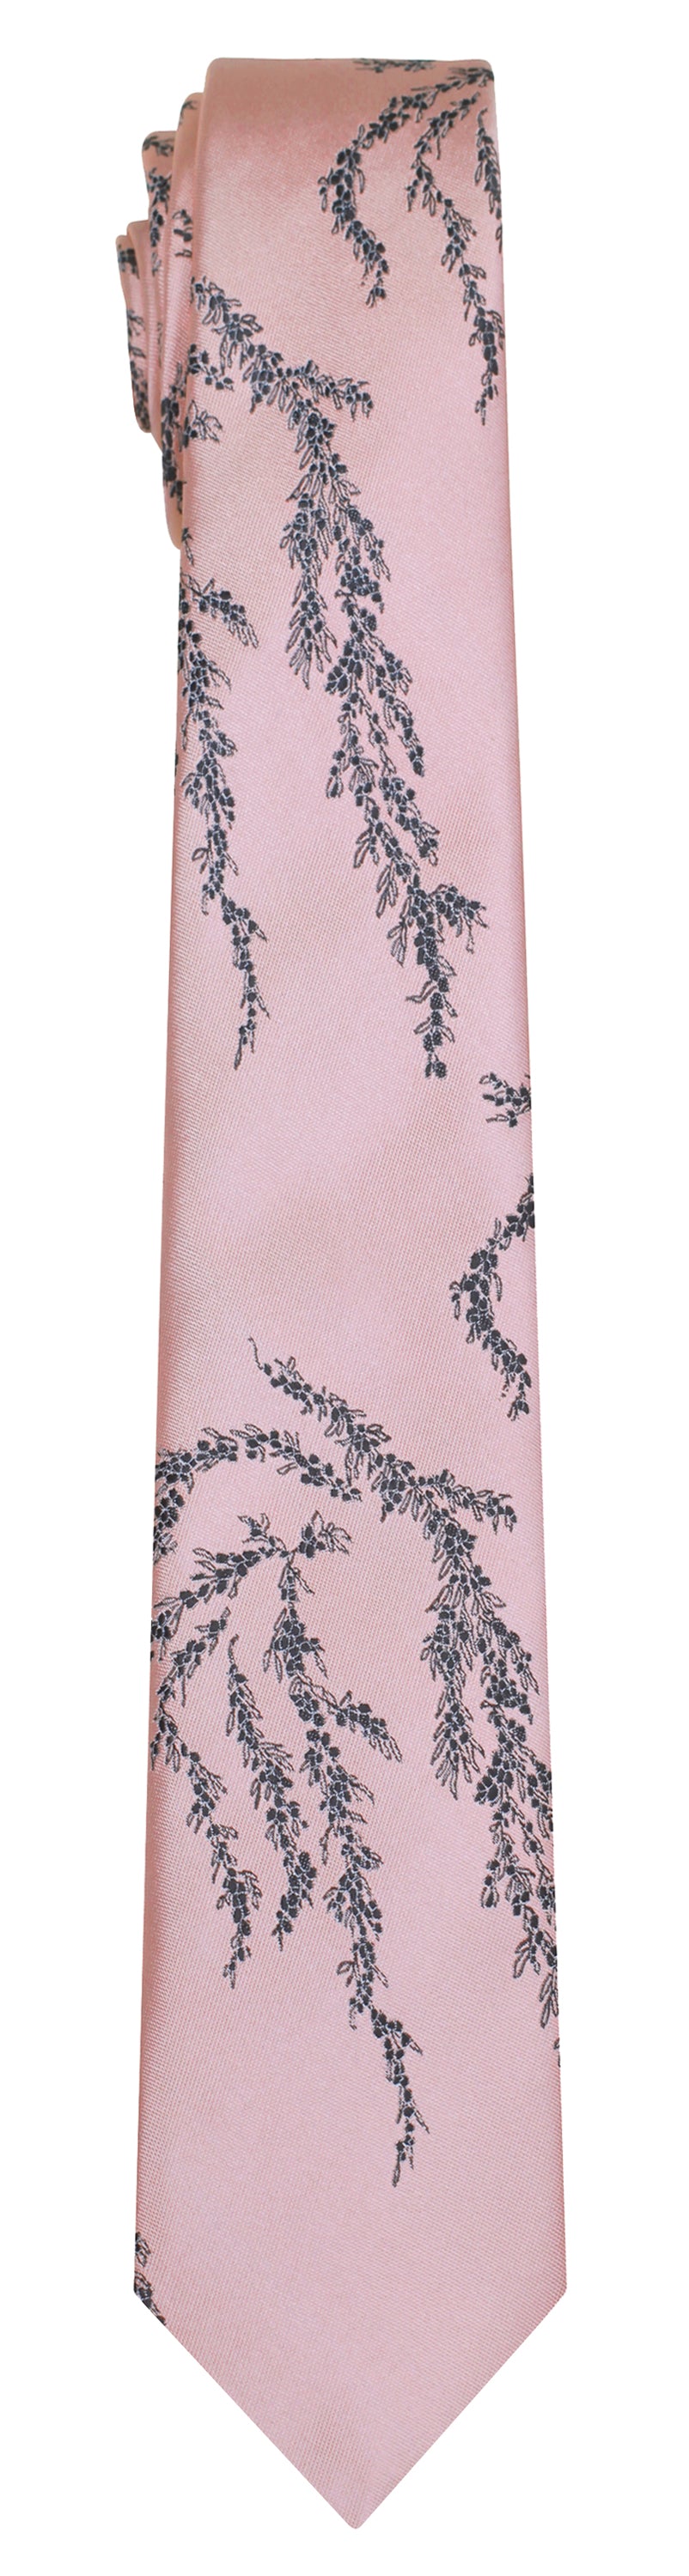 Mimi Fong Seaweed Tie in Light Pink